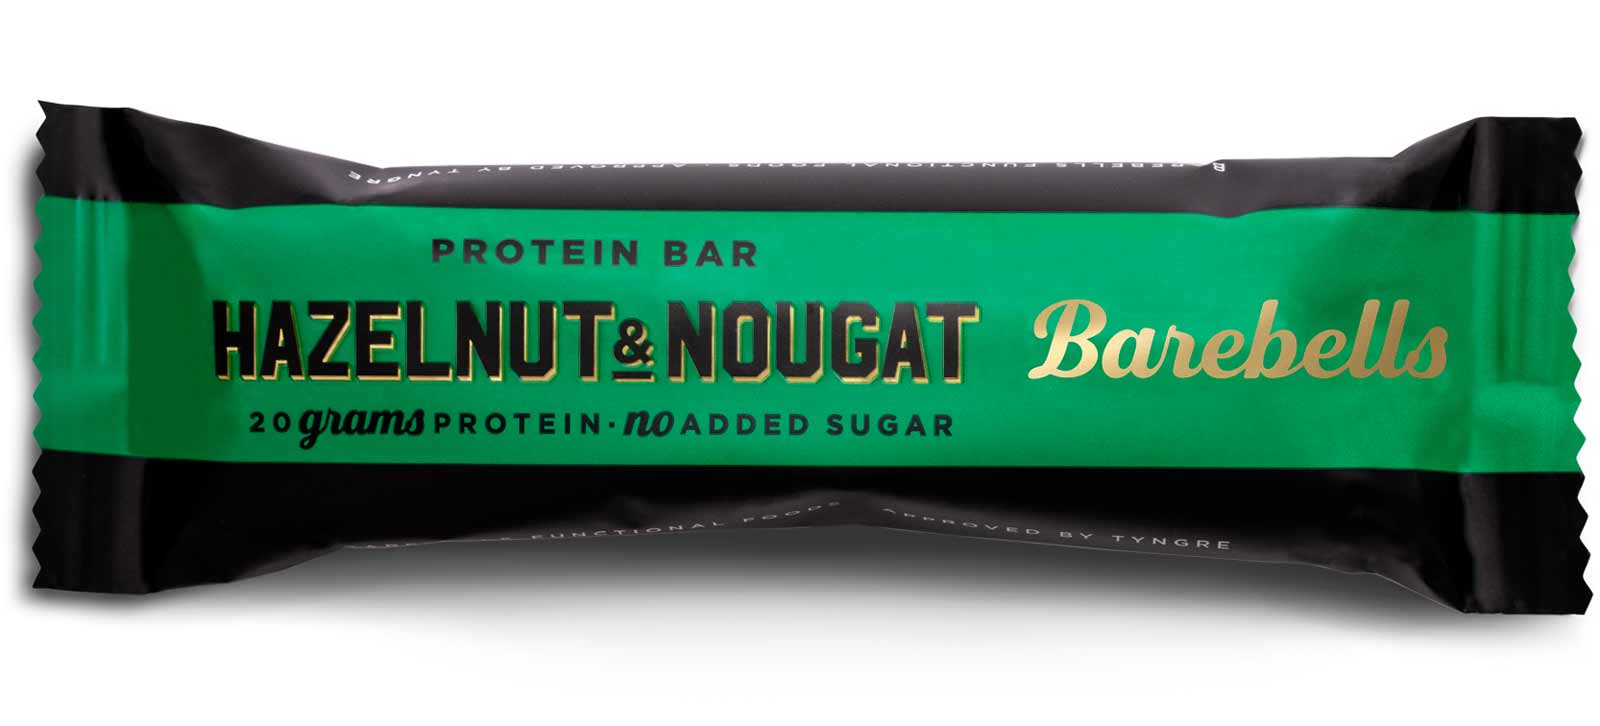 Barebells Flavor Hazelnut & Nougat